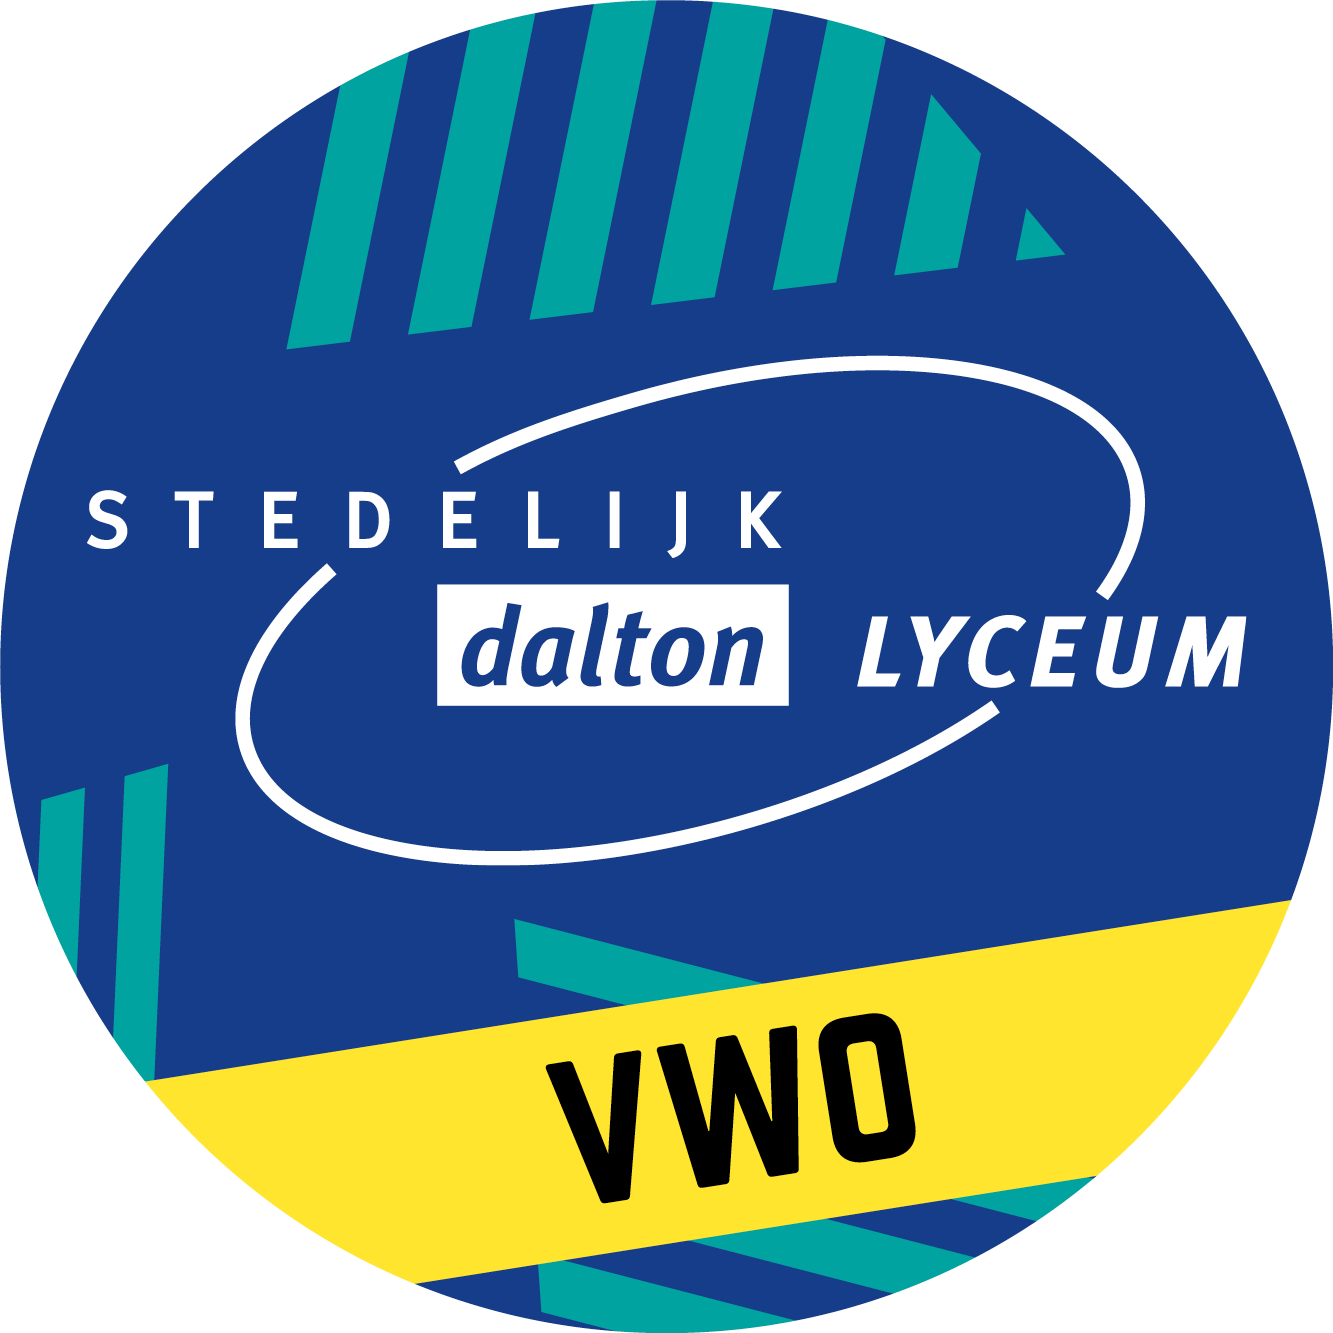 Stedelijk Dalton Lyceum VWO